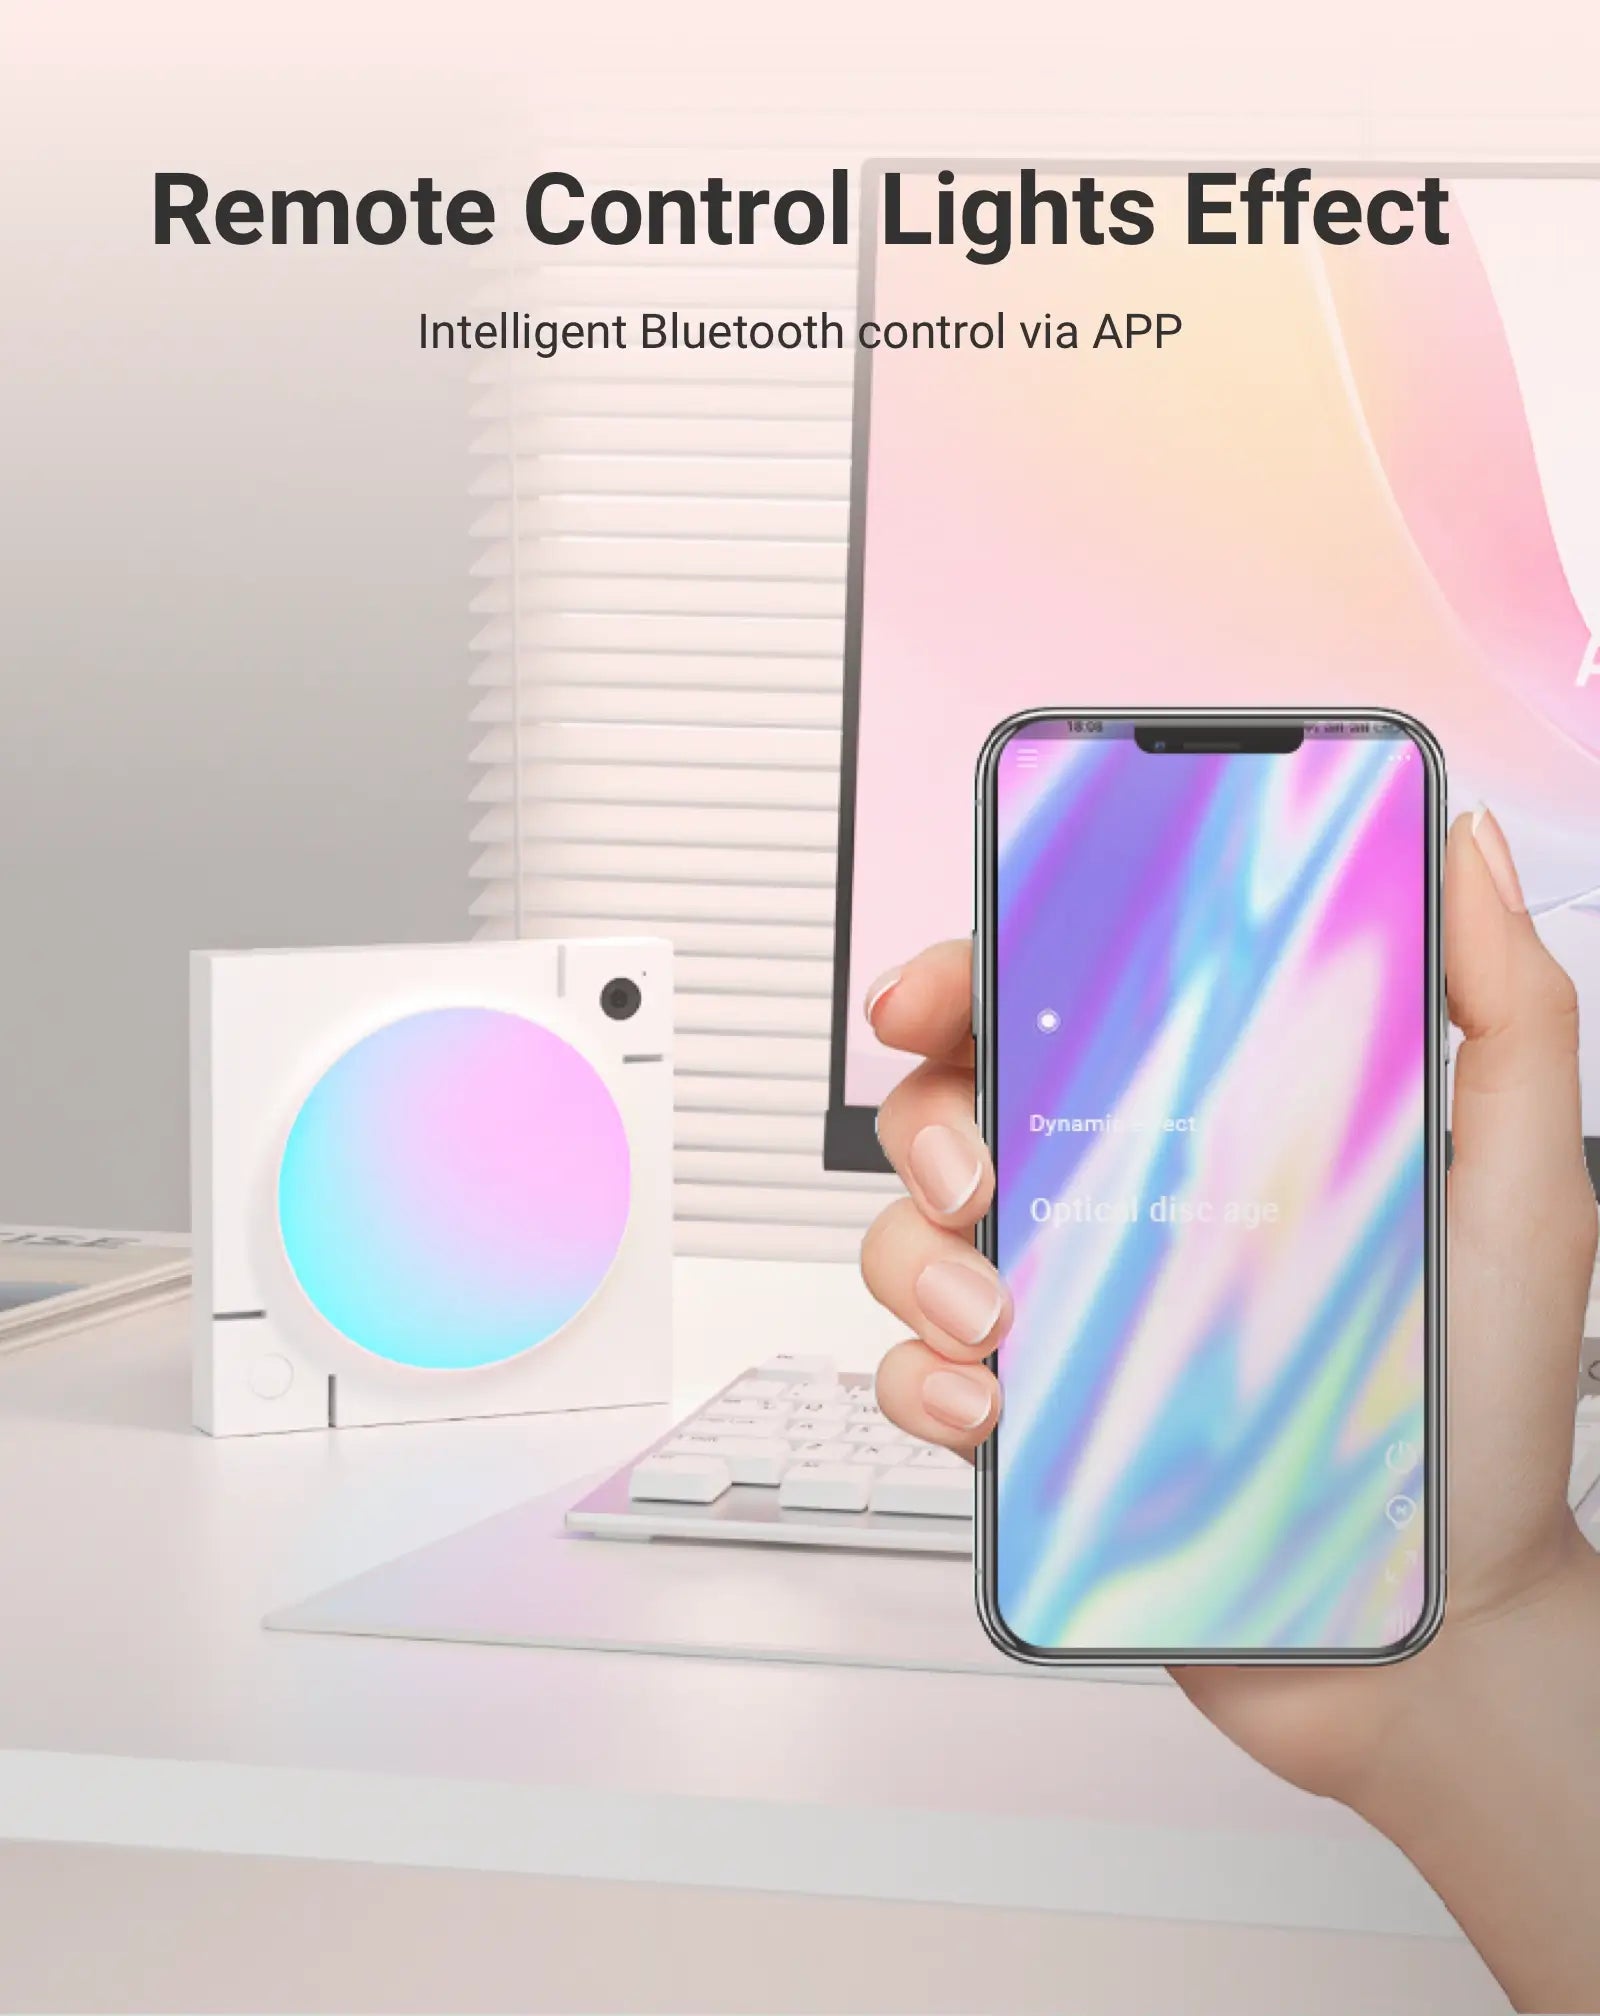 Remote Control Lights Effect Intelligent Bluetooth control via APP